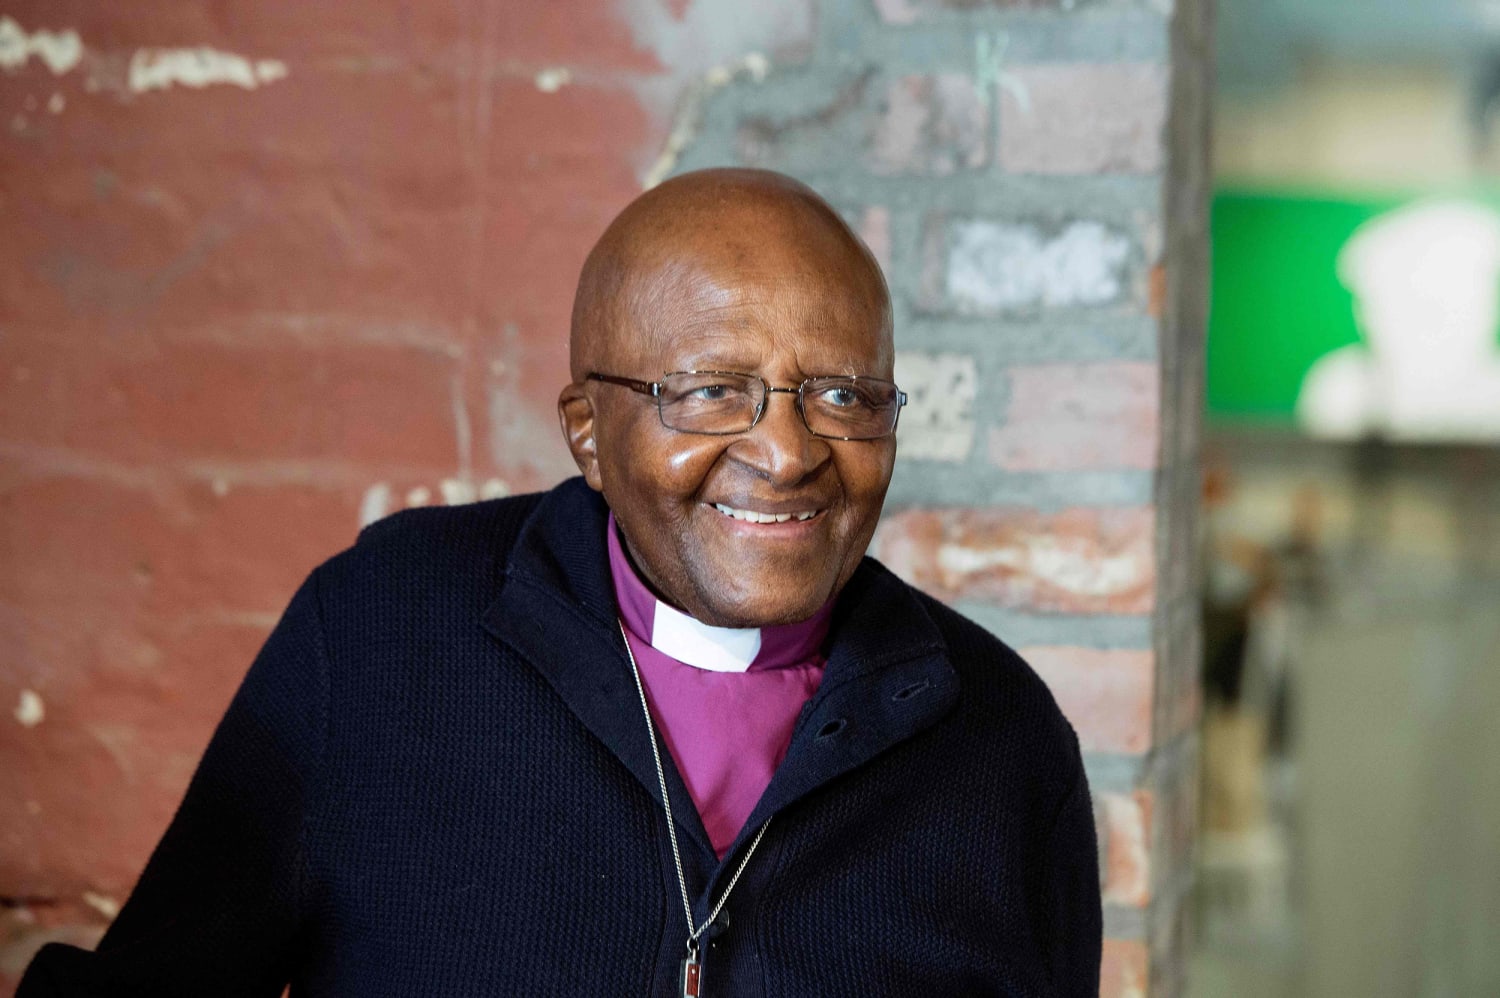 South African anti-apartheid campaigner Archbishop Tutu in hospital